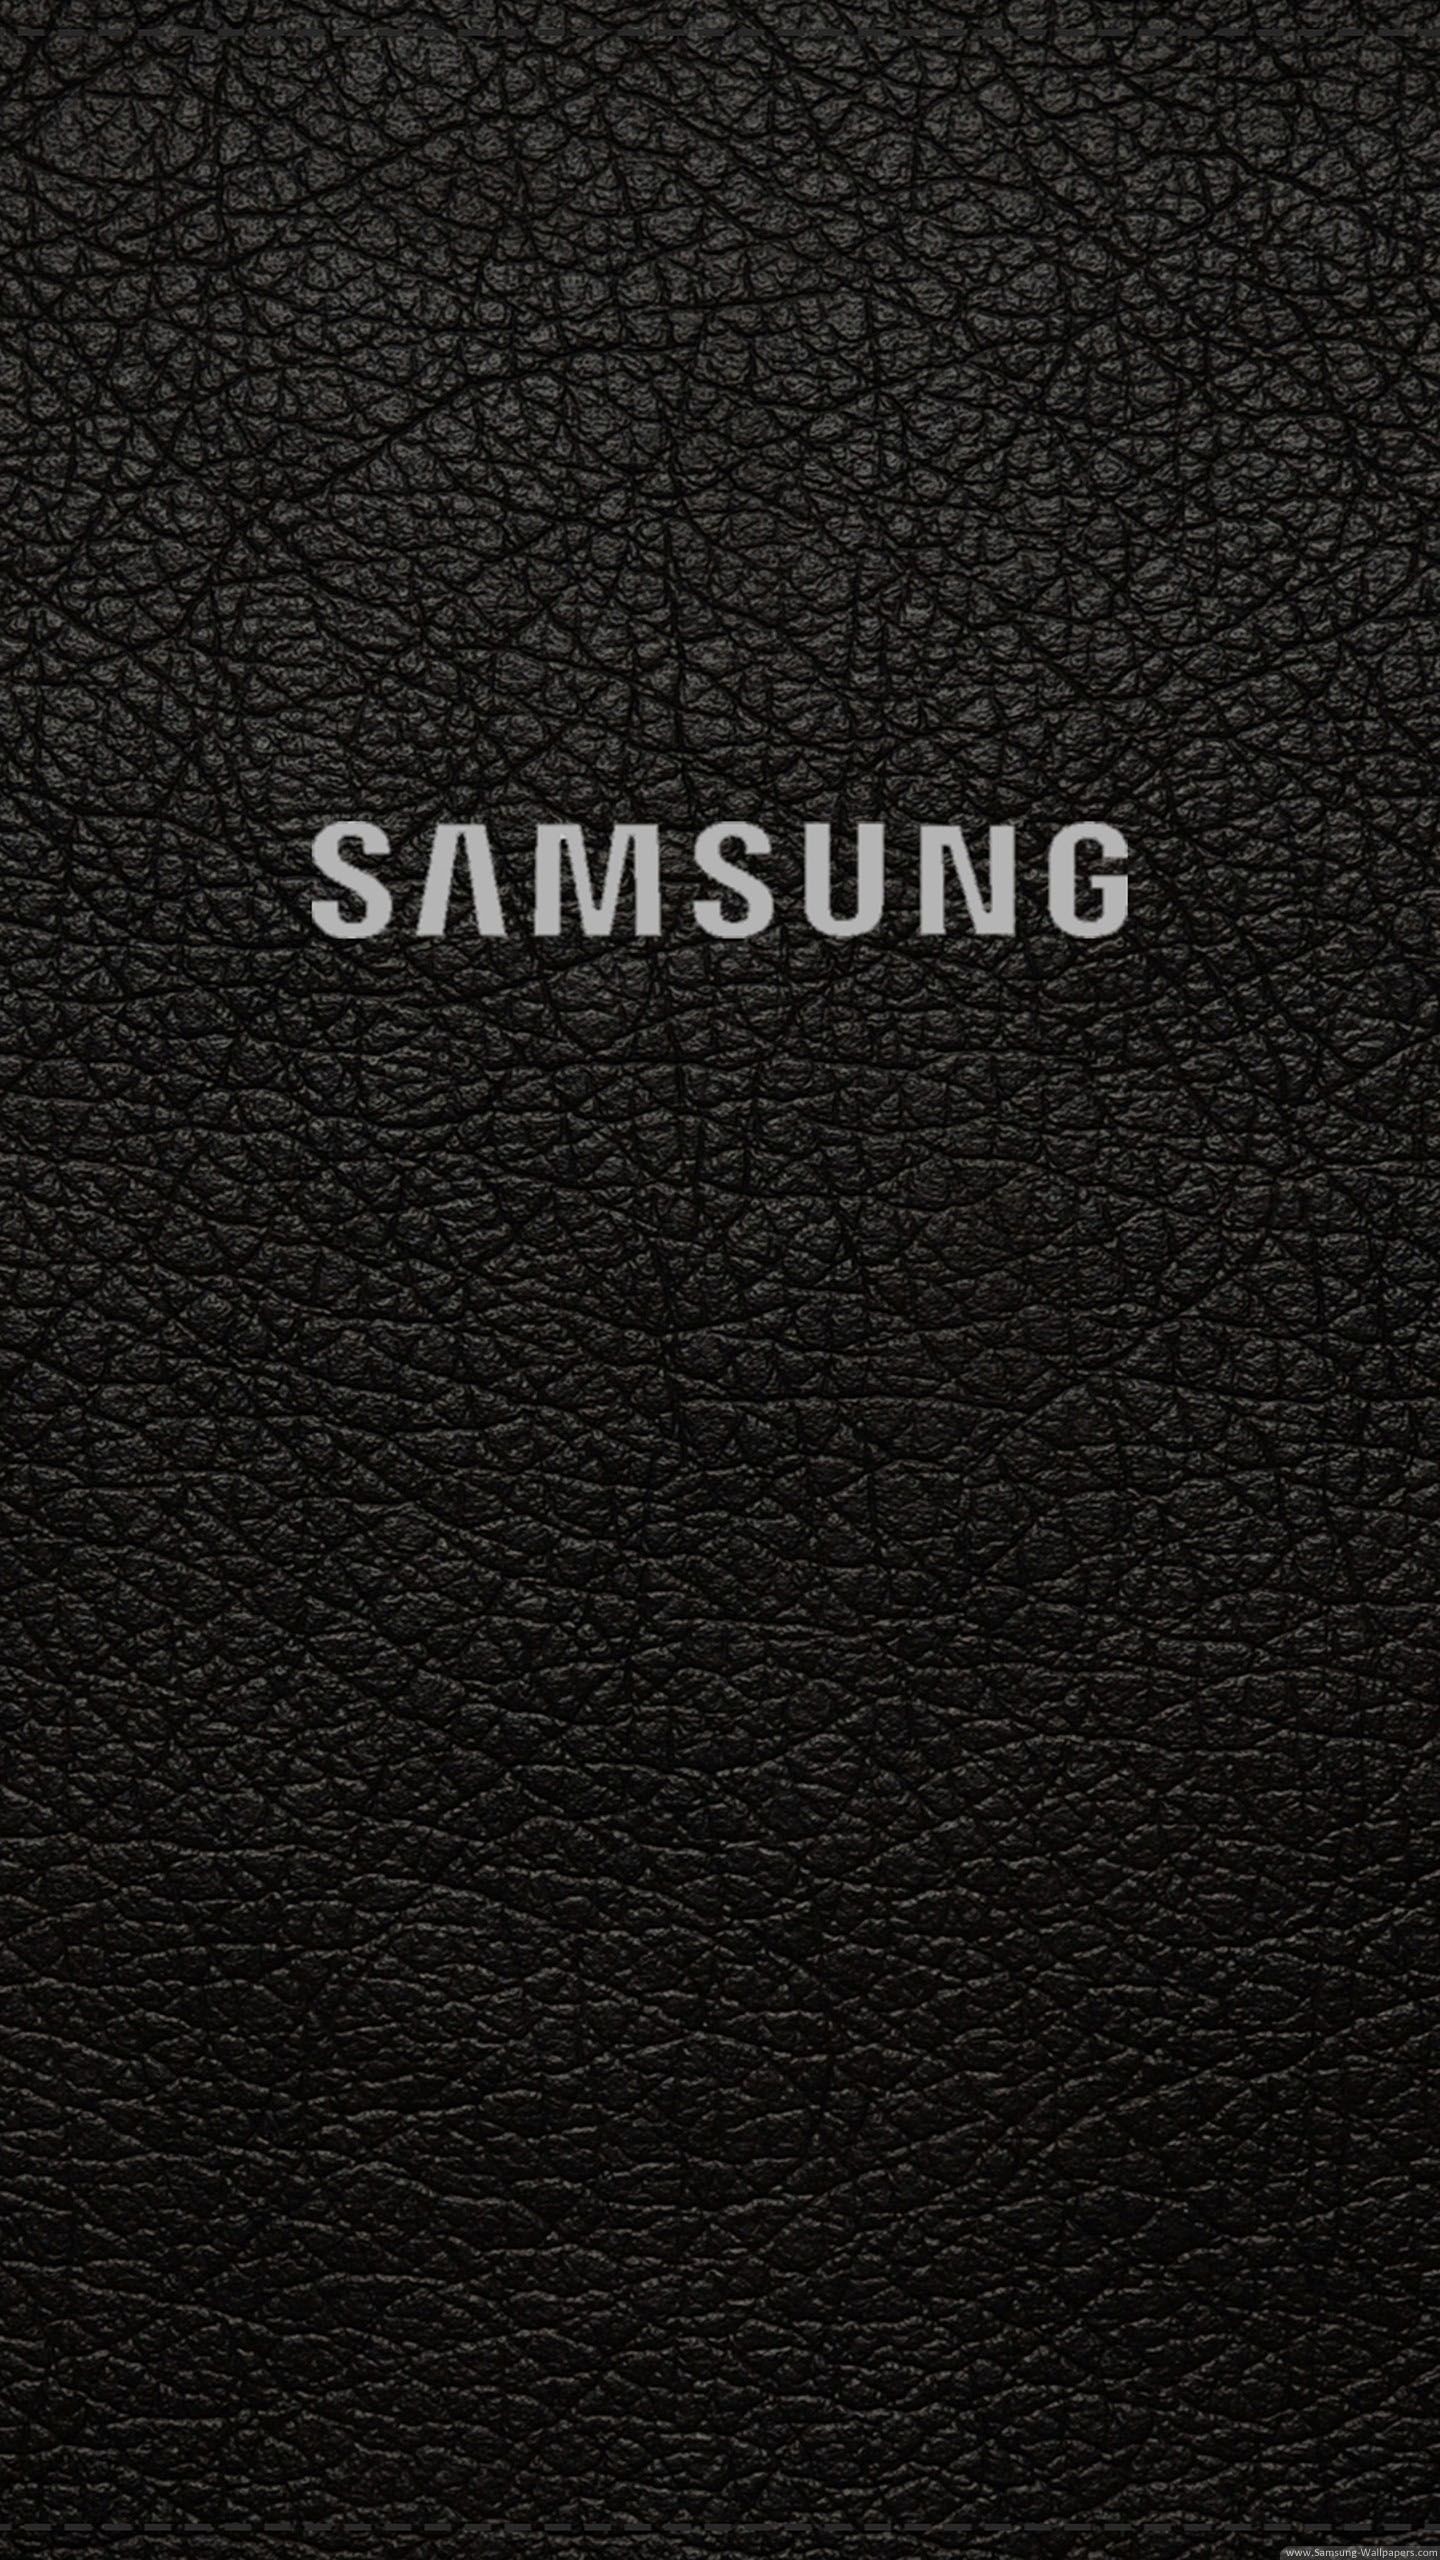 Samsung Phone Wallpaper